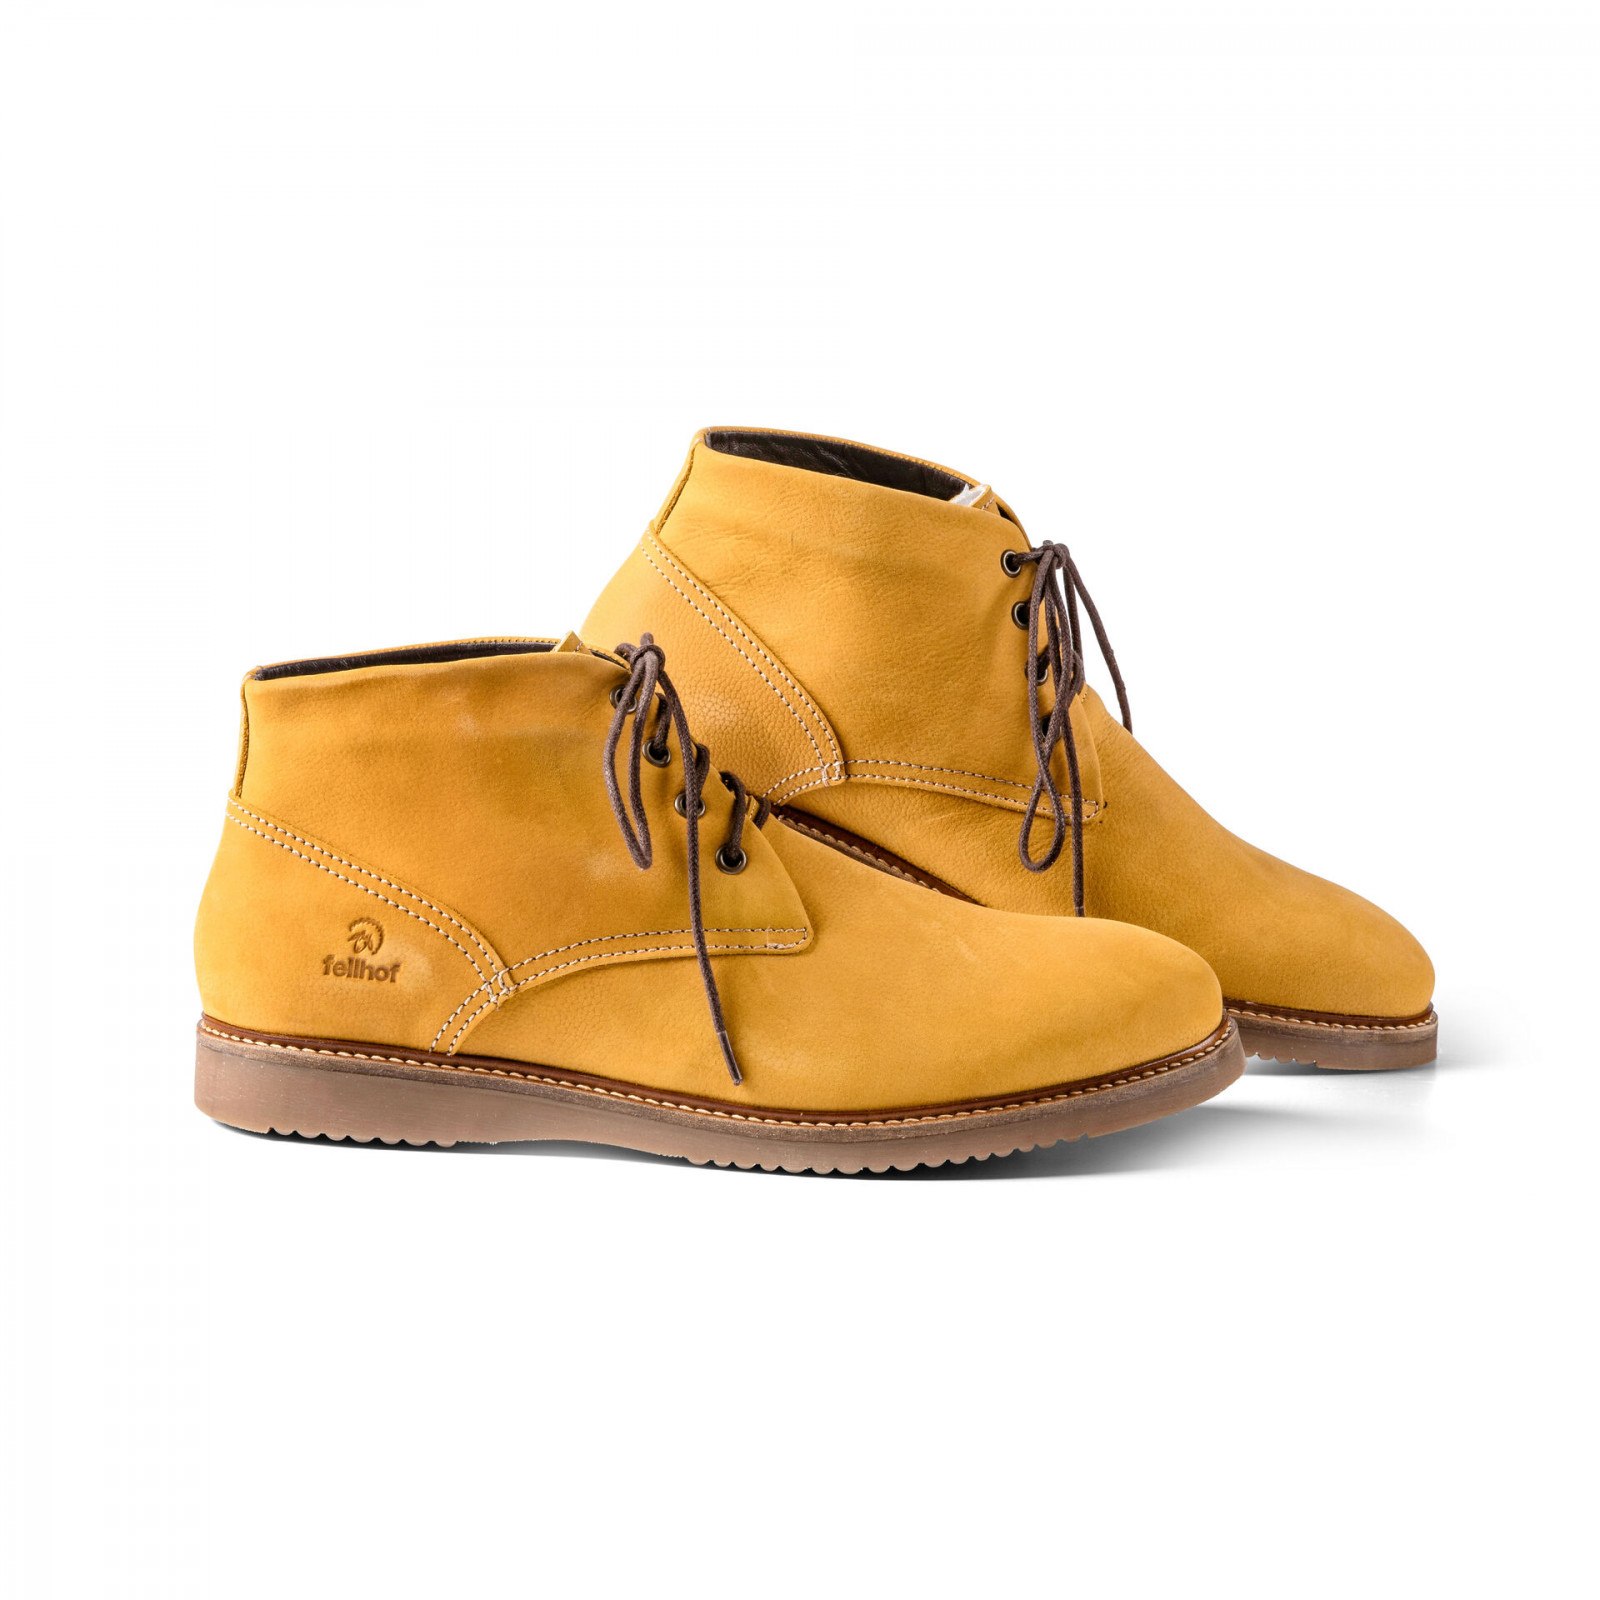 Pánská obuv VILLACHER Velikost: 42, Zvolte variantu: Žlutá